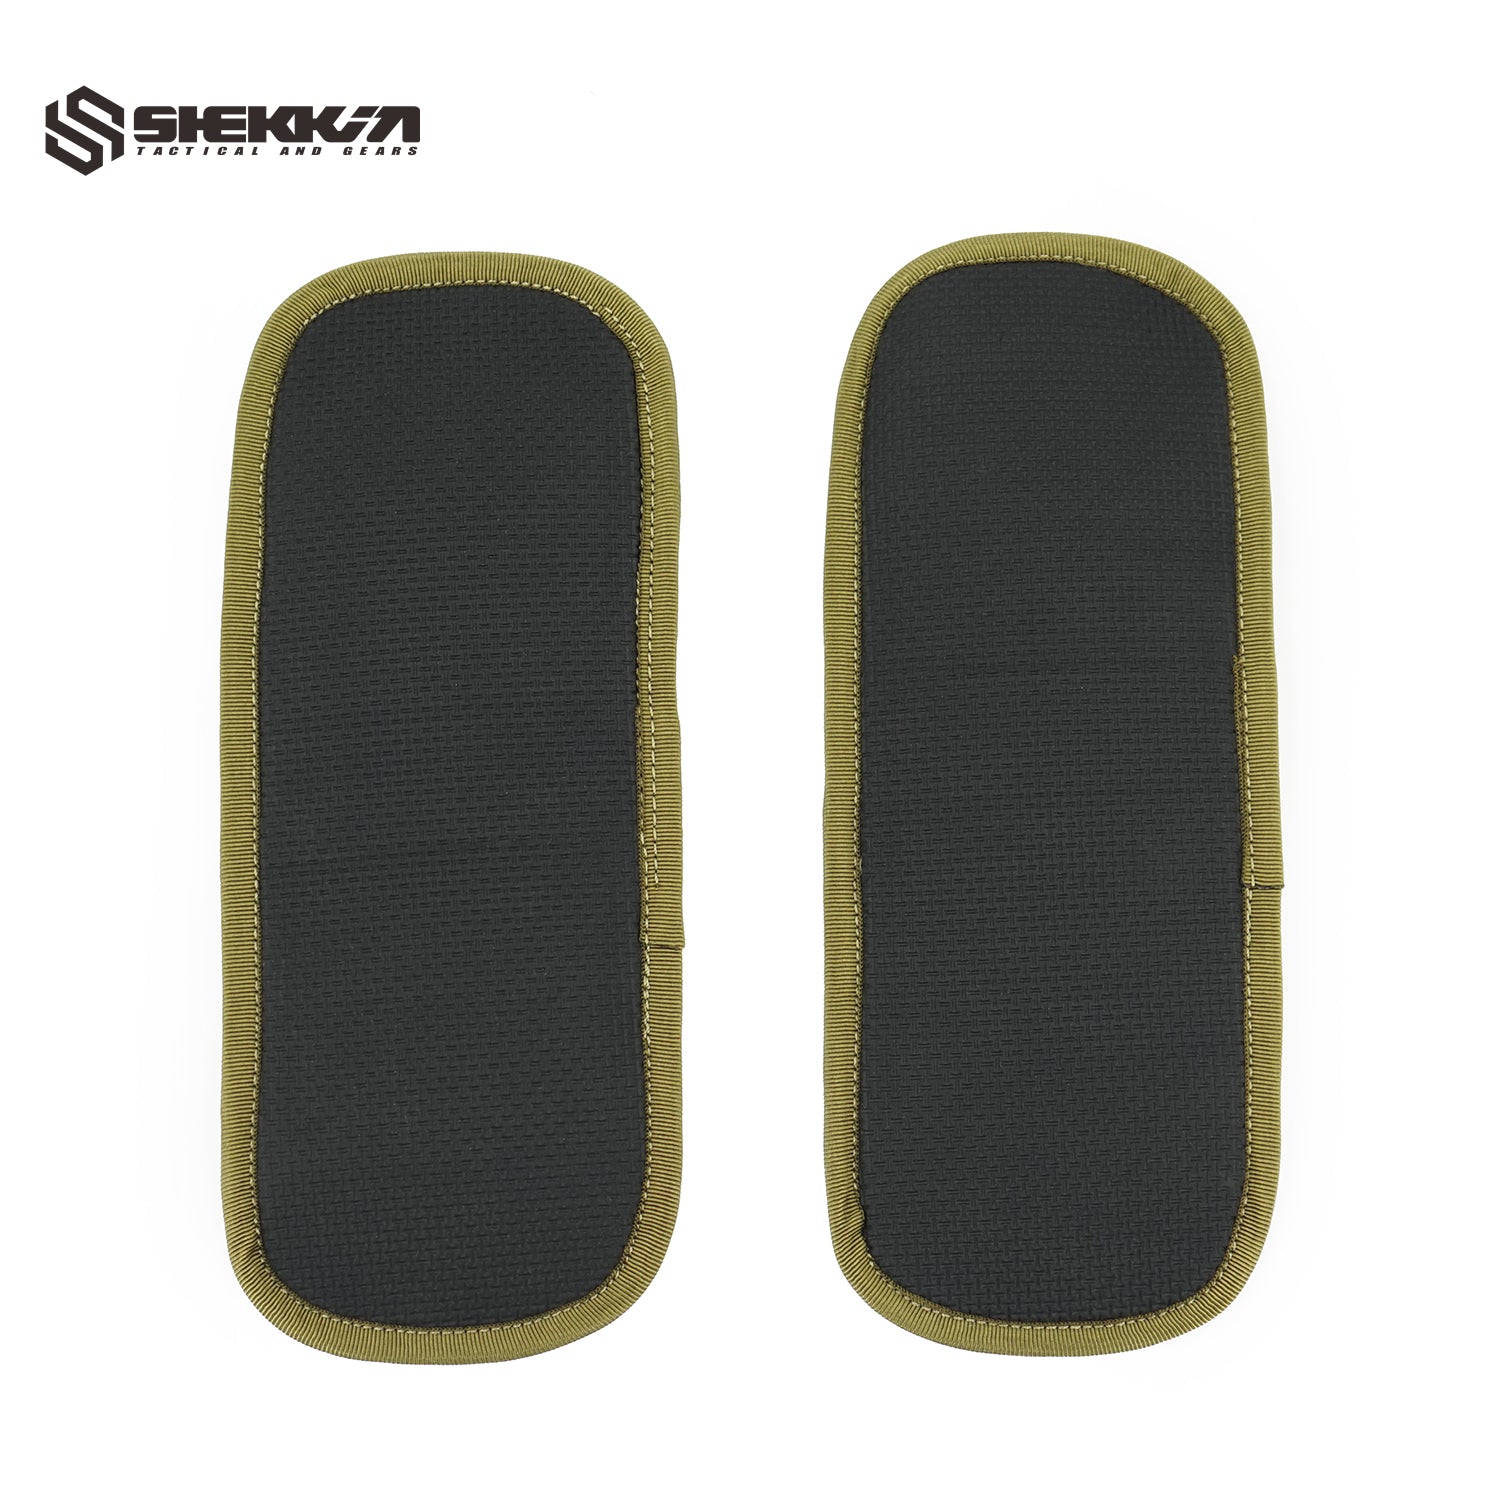 HSGI style Gel Shoulder Pads - Shekkin Gears